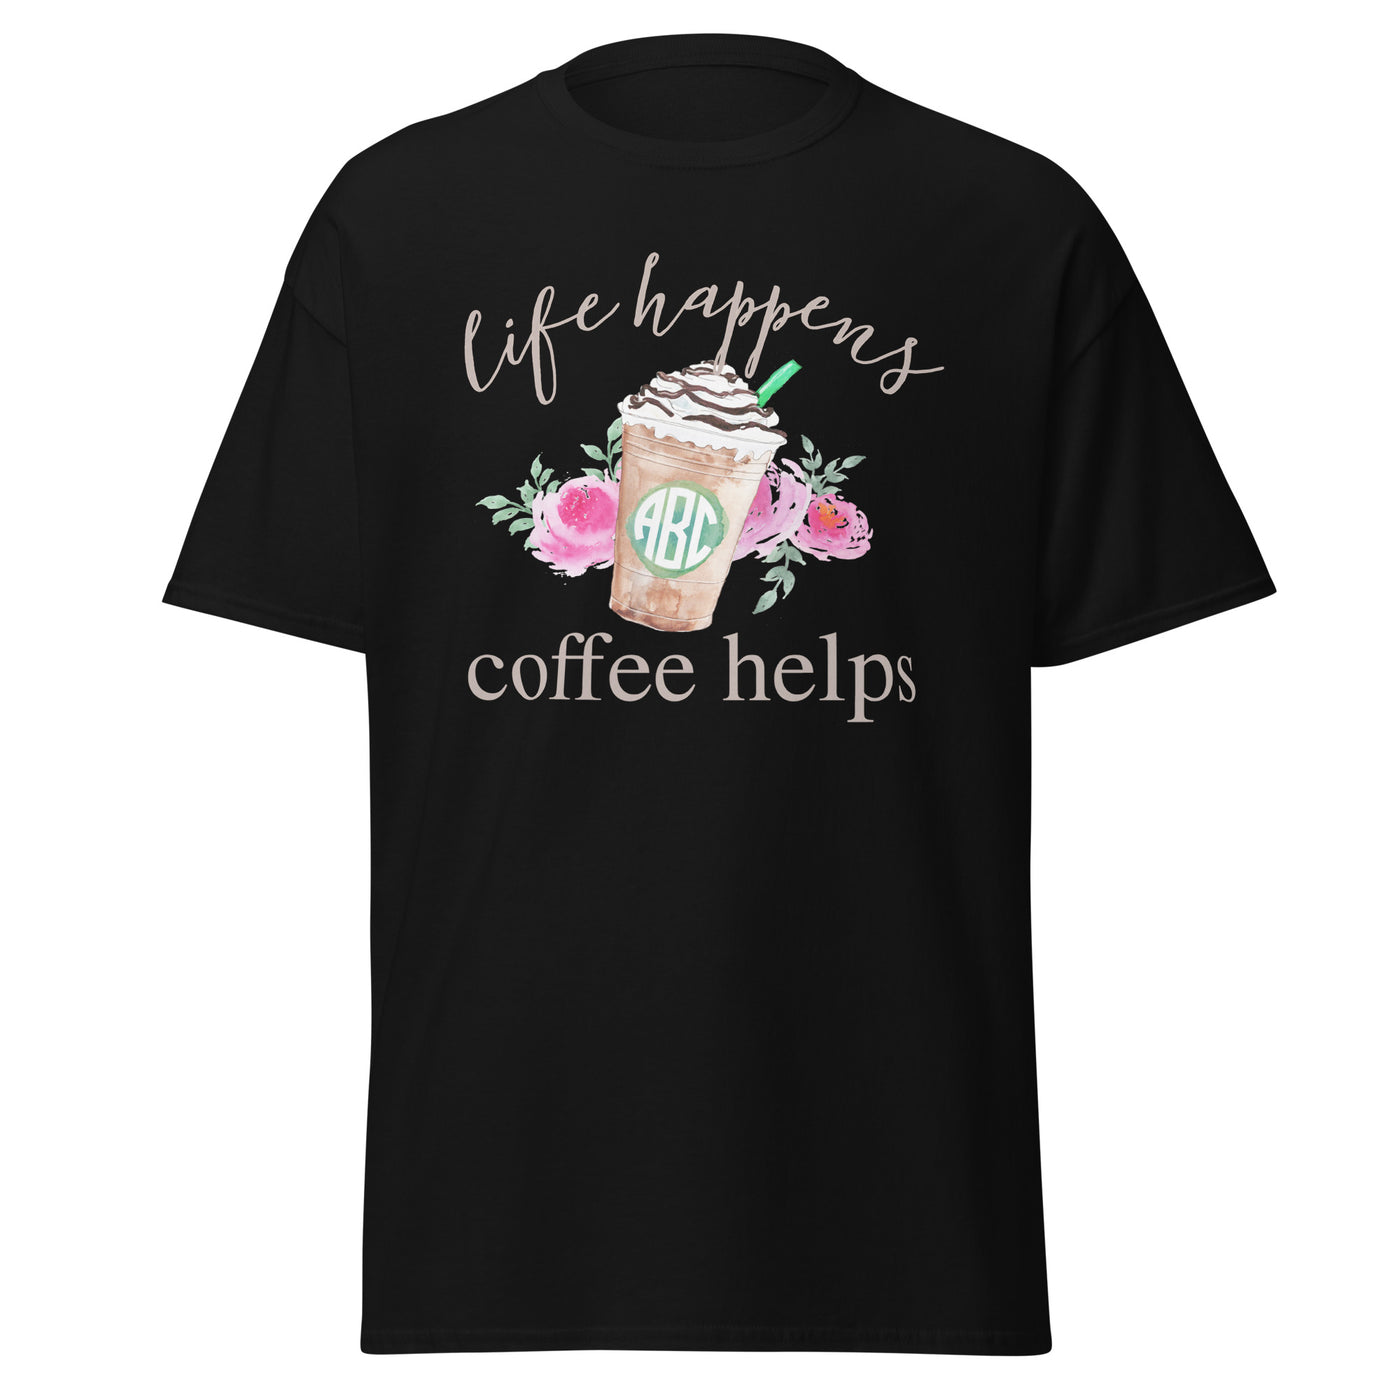 Monogrammed 'Life Happens, Coffee Helps' Basic T-Shirt